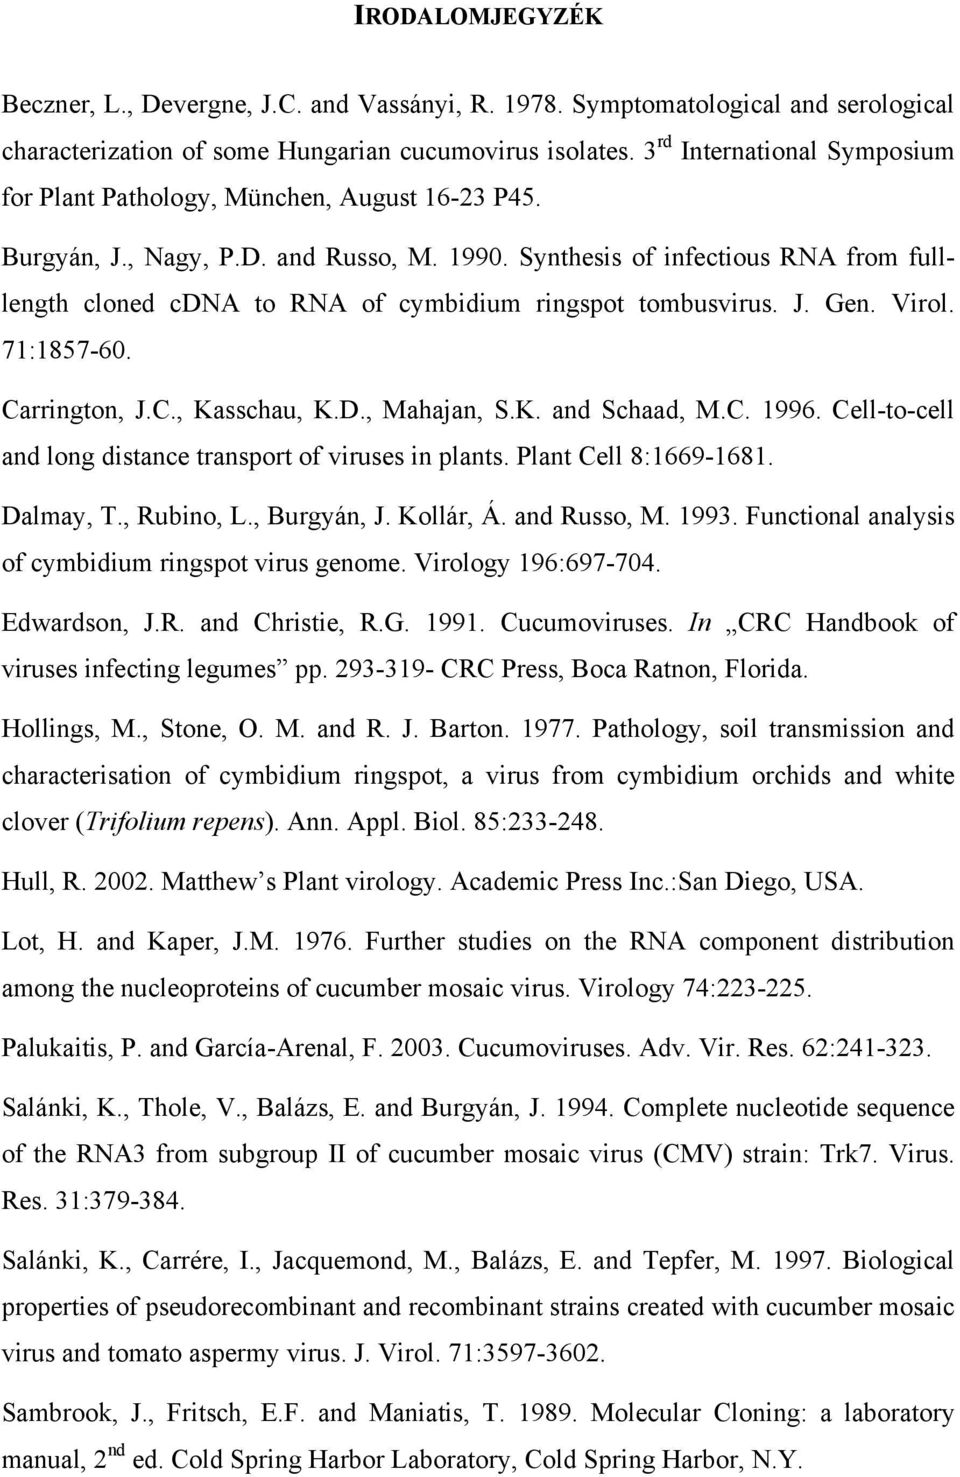 Synthesis of infectious RNA from fulllength cloned cdna to RNA of cymbidium ringspot tombusvirus. J. Gen. Virol. 71:1857-60. Carrington, J.C., Kasschau, K.D., Mahajan, S.K. and Schaad, M.C. 1996.